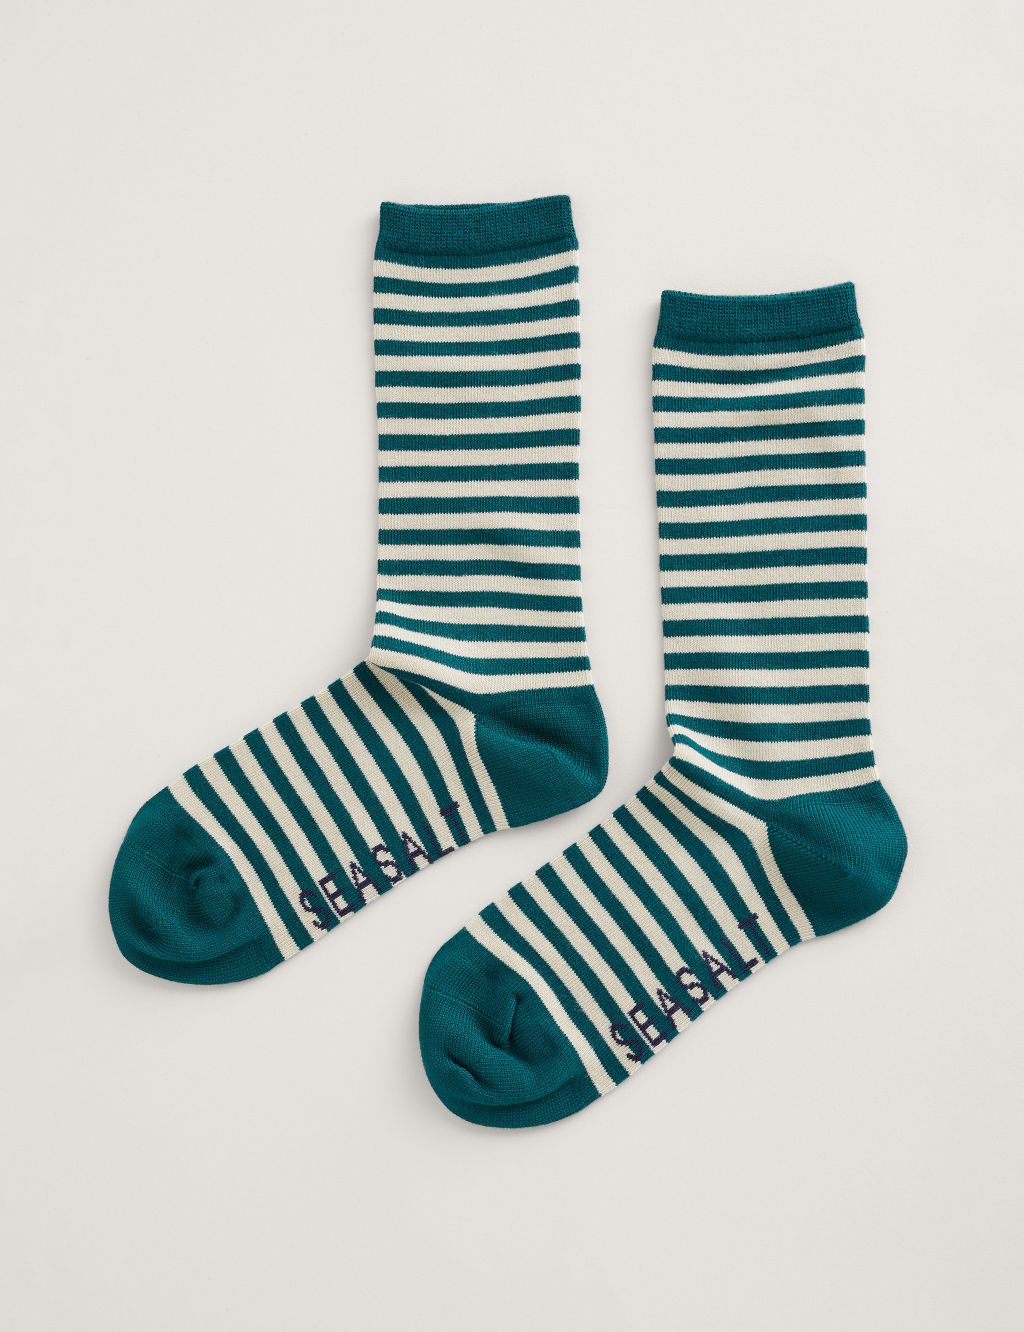 Striped Ankle High Socks image 1